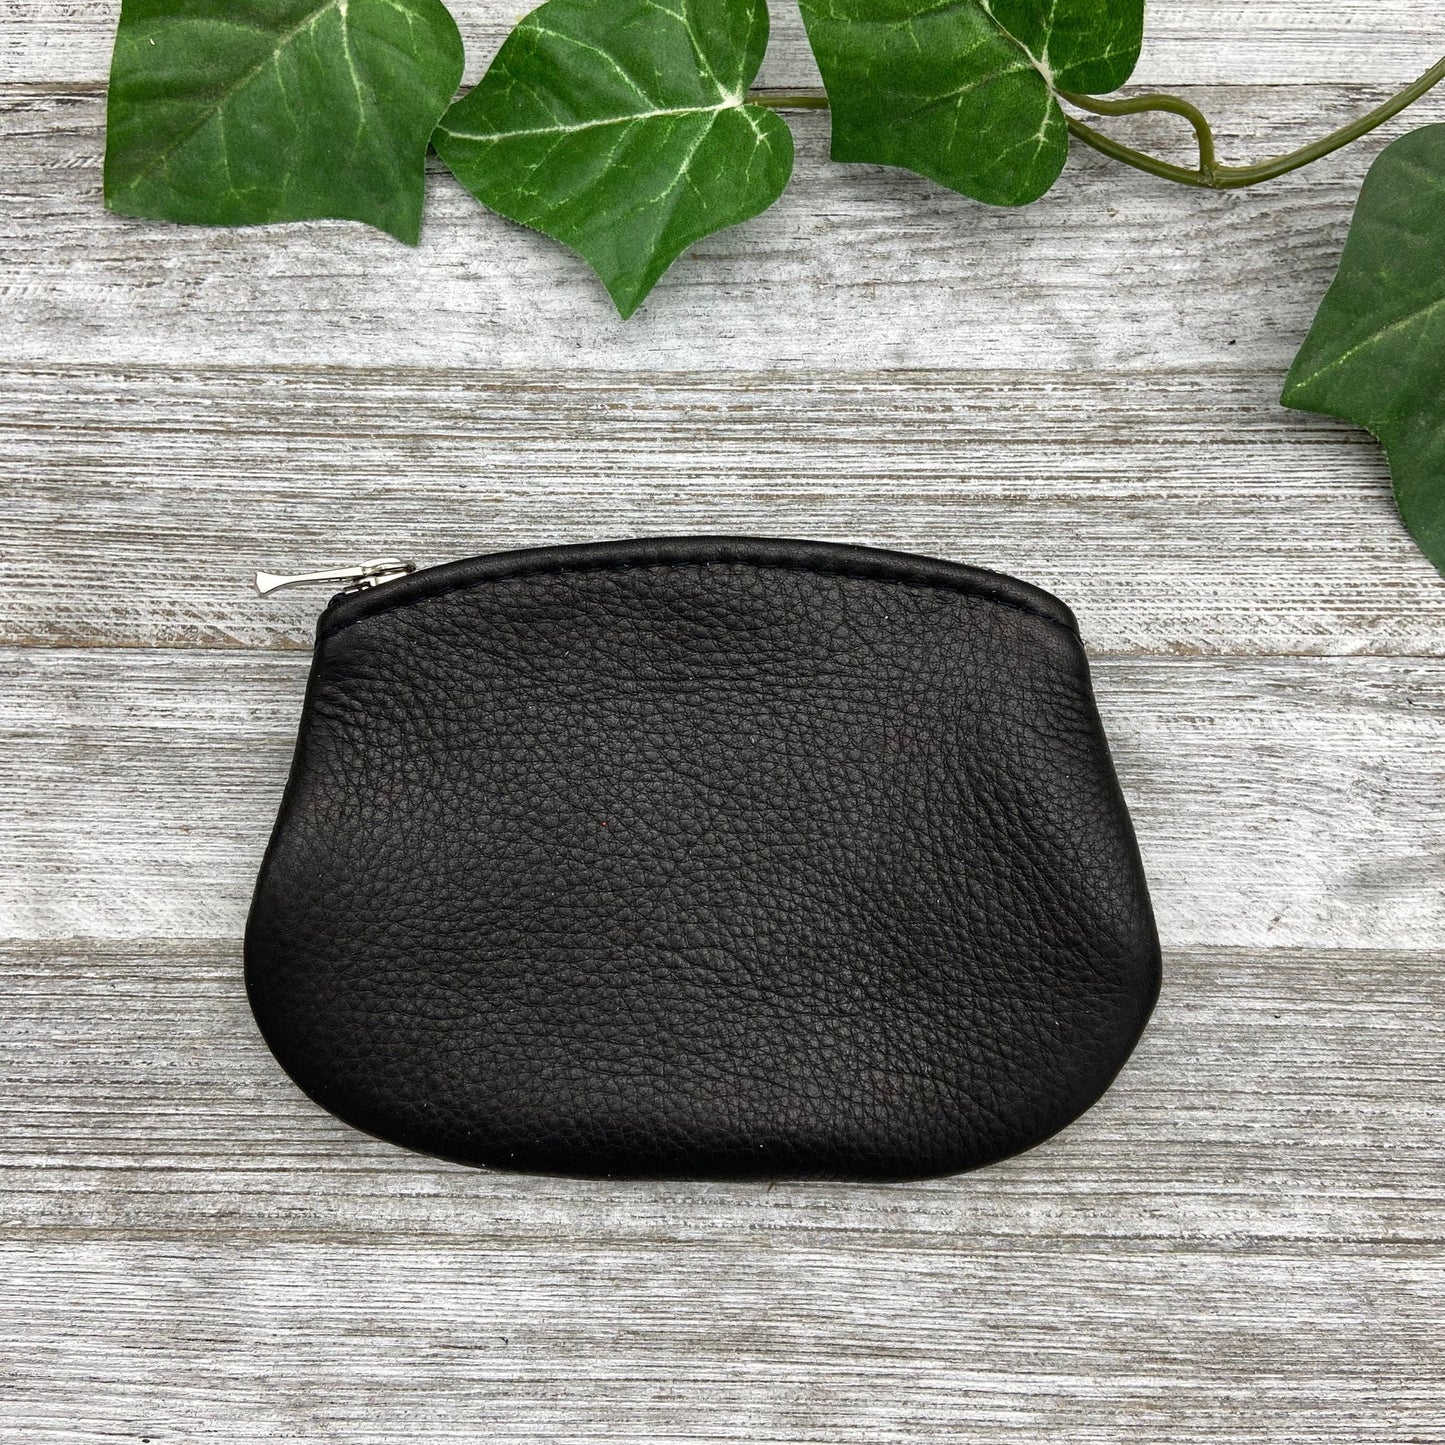 Medium Oval Leather Zipper Pouch (4.8" zipper)